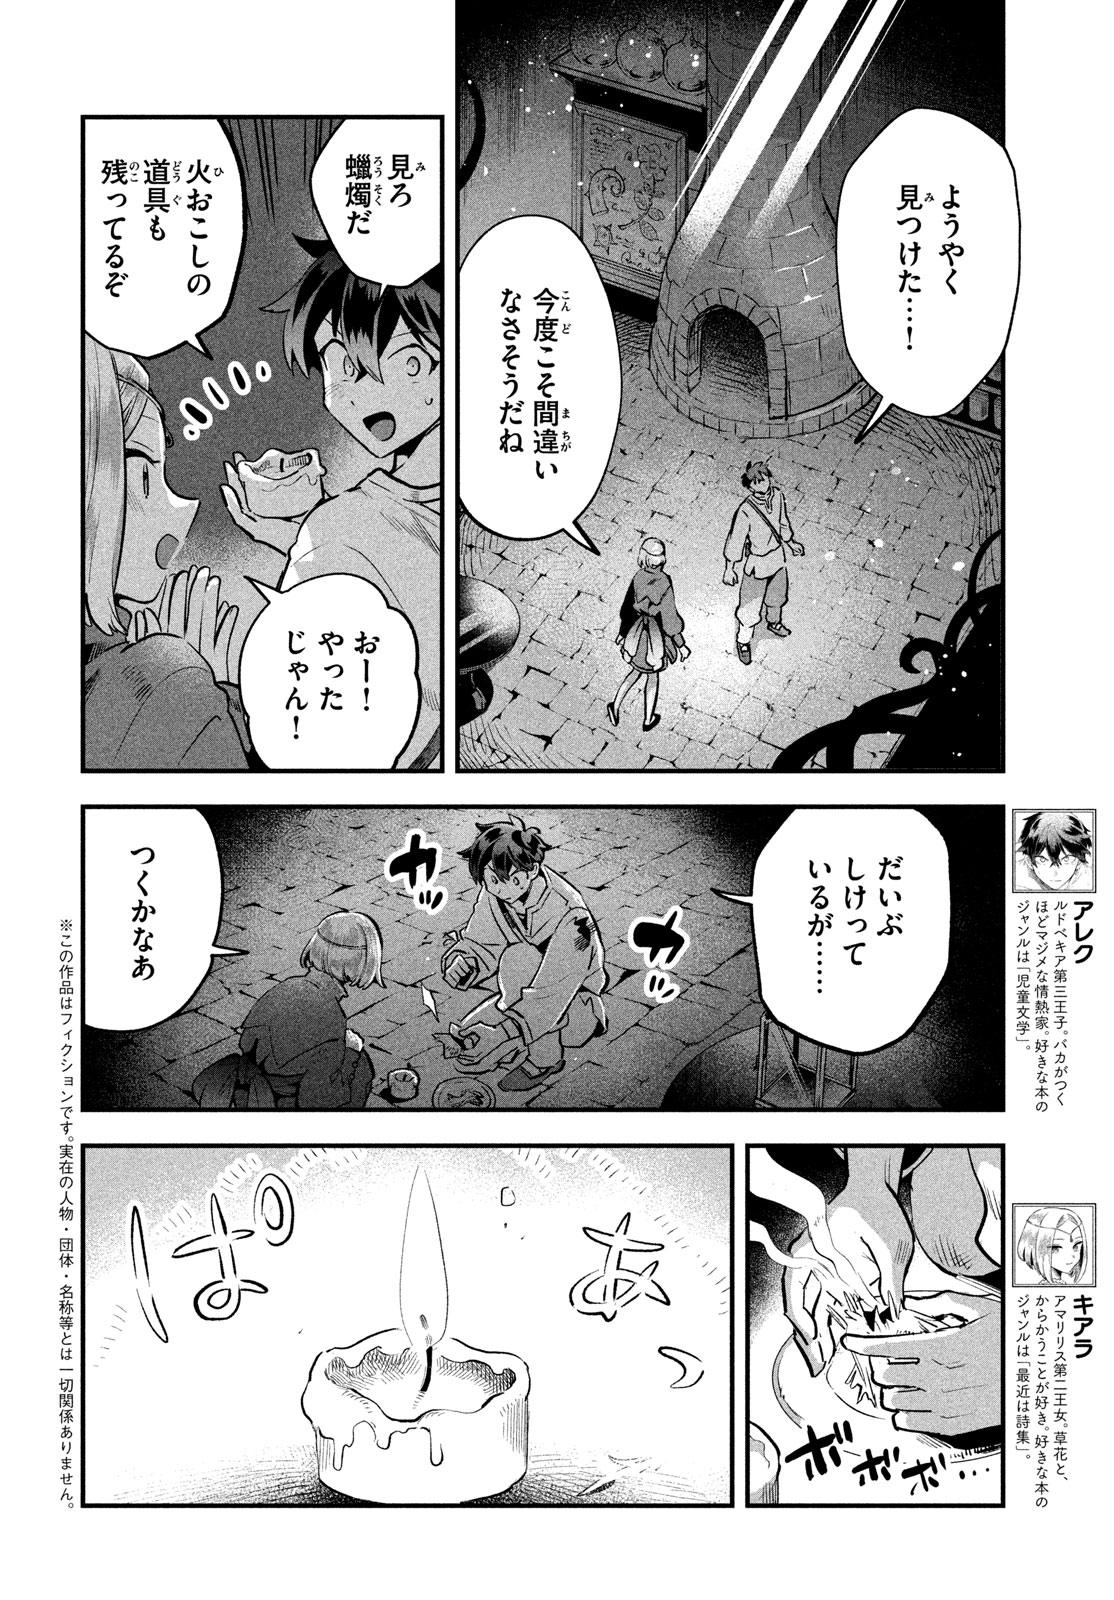 7-nin no Nemuri Hime - Chapter 38 - Page 2